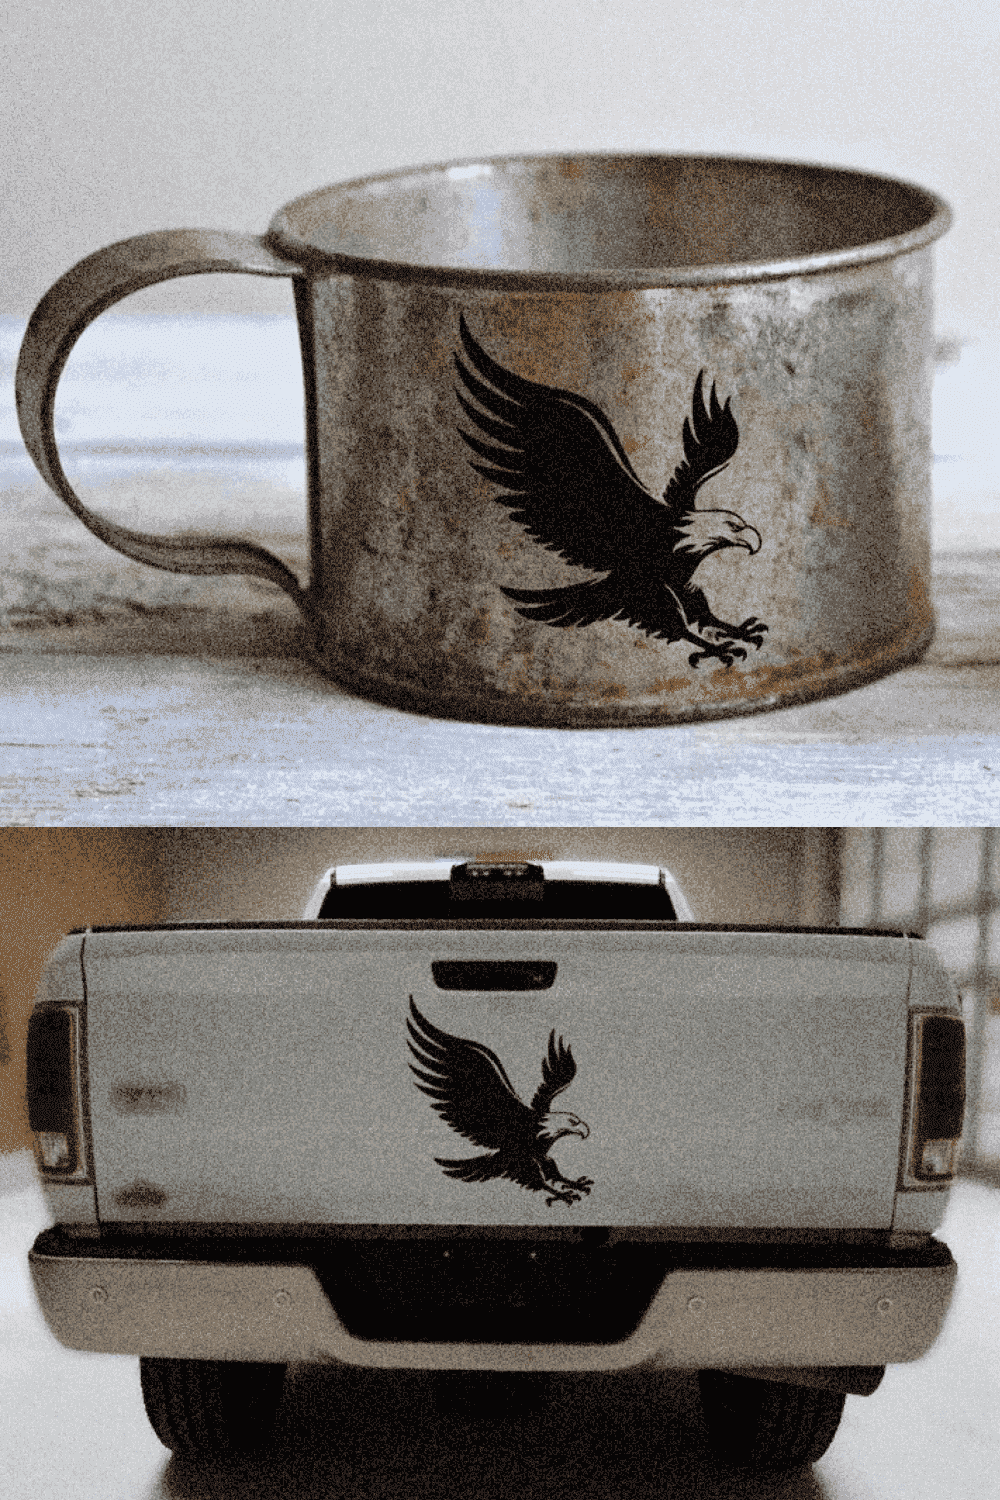 Eagle,American Eagle, American Symbol - Eagle Print On The Car And Cup.